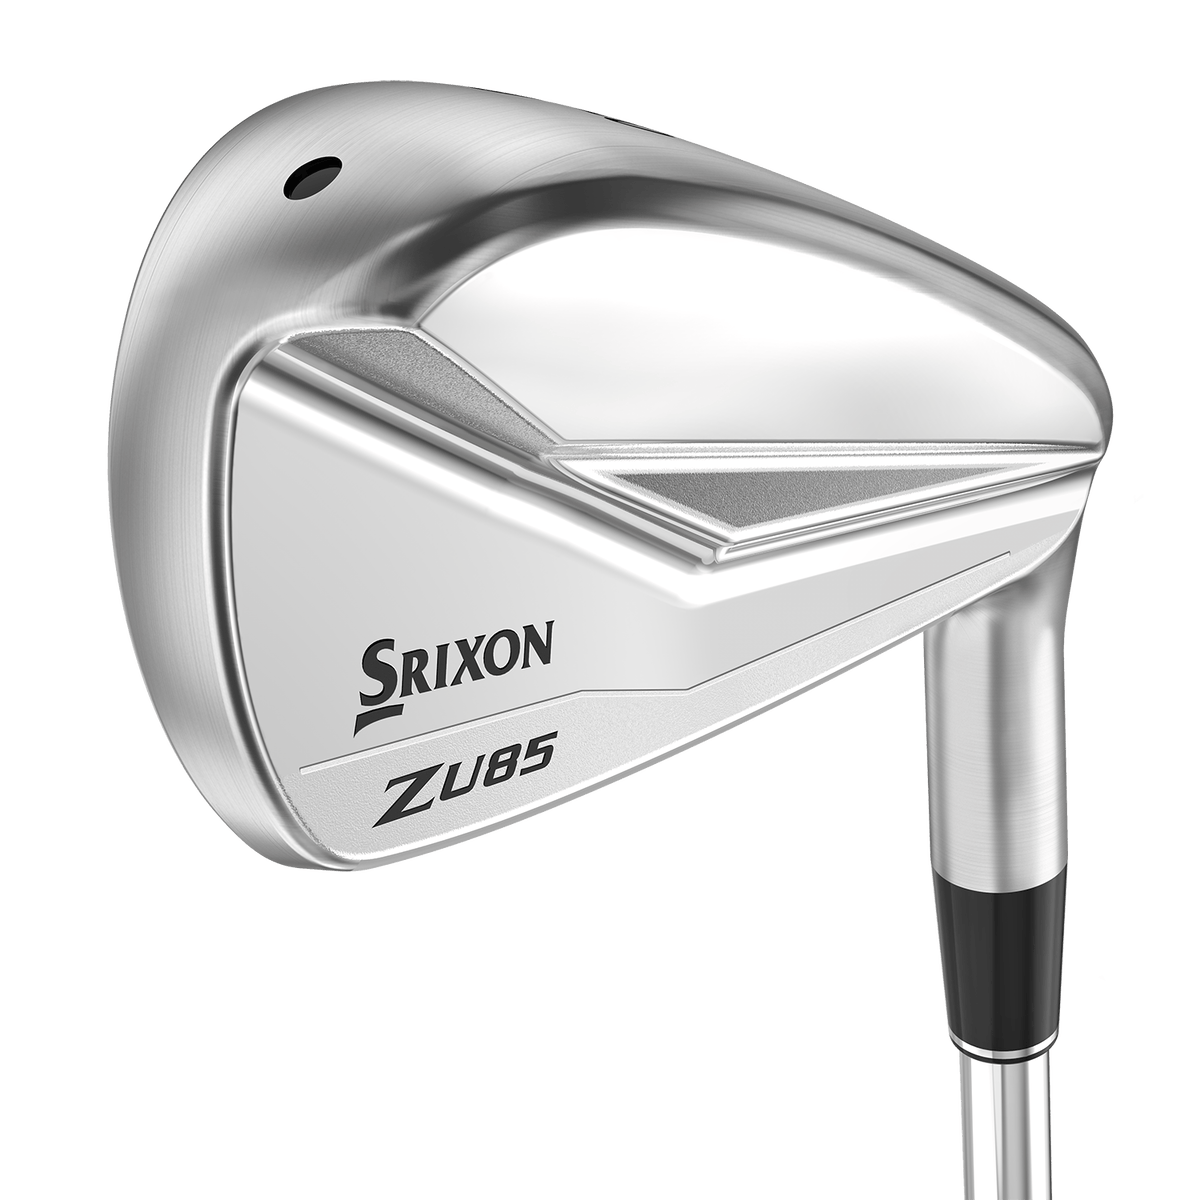 Srixon Z U85 Utility Iron